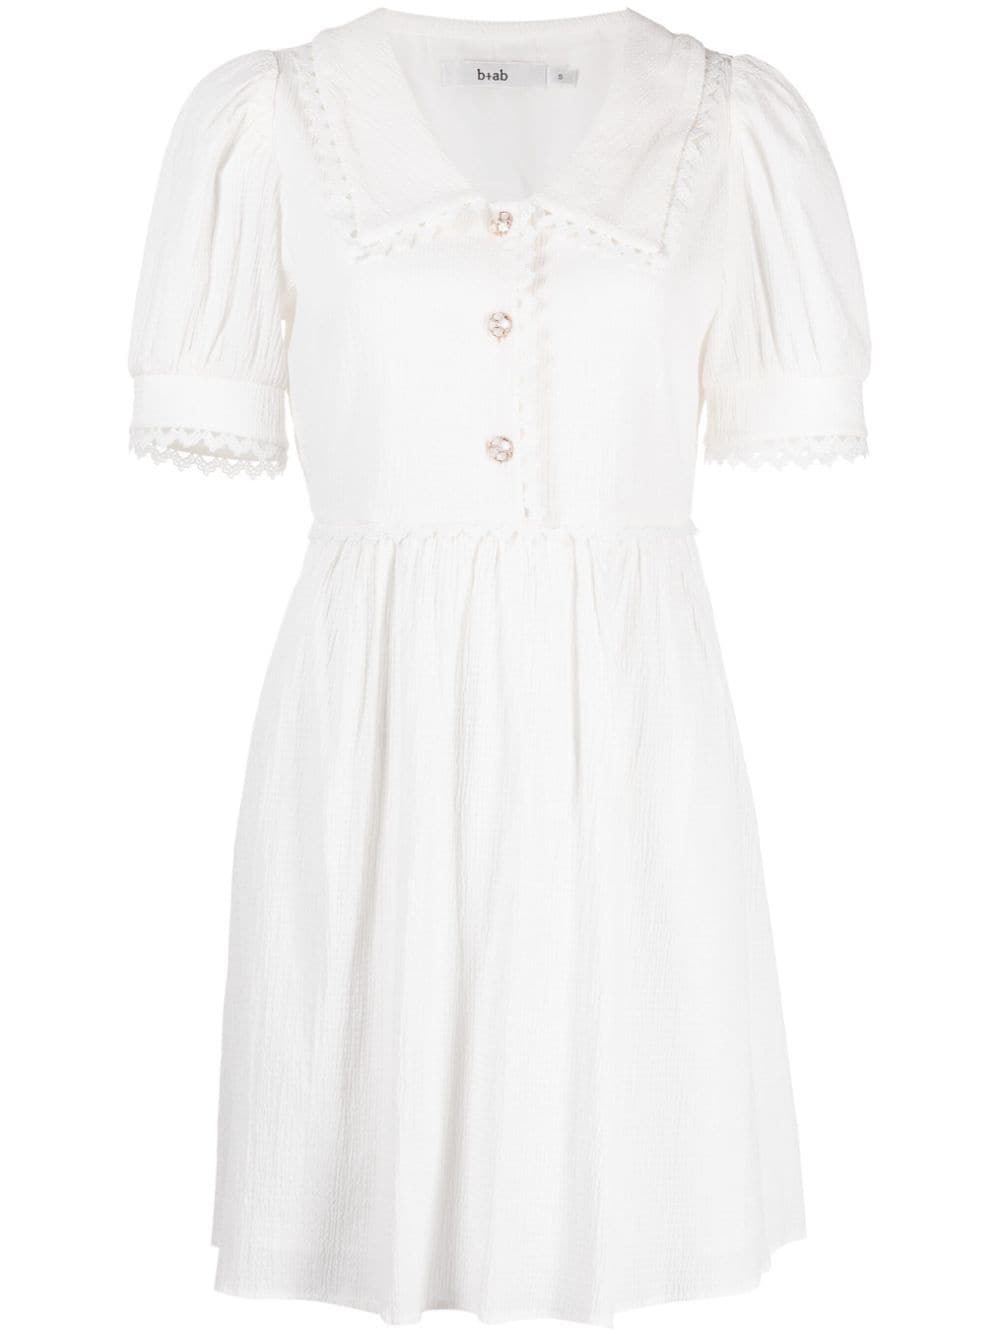 b+ab short-sleeve textured minidress - White